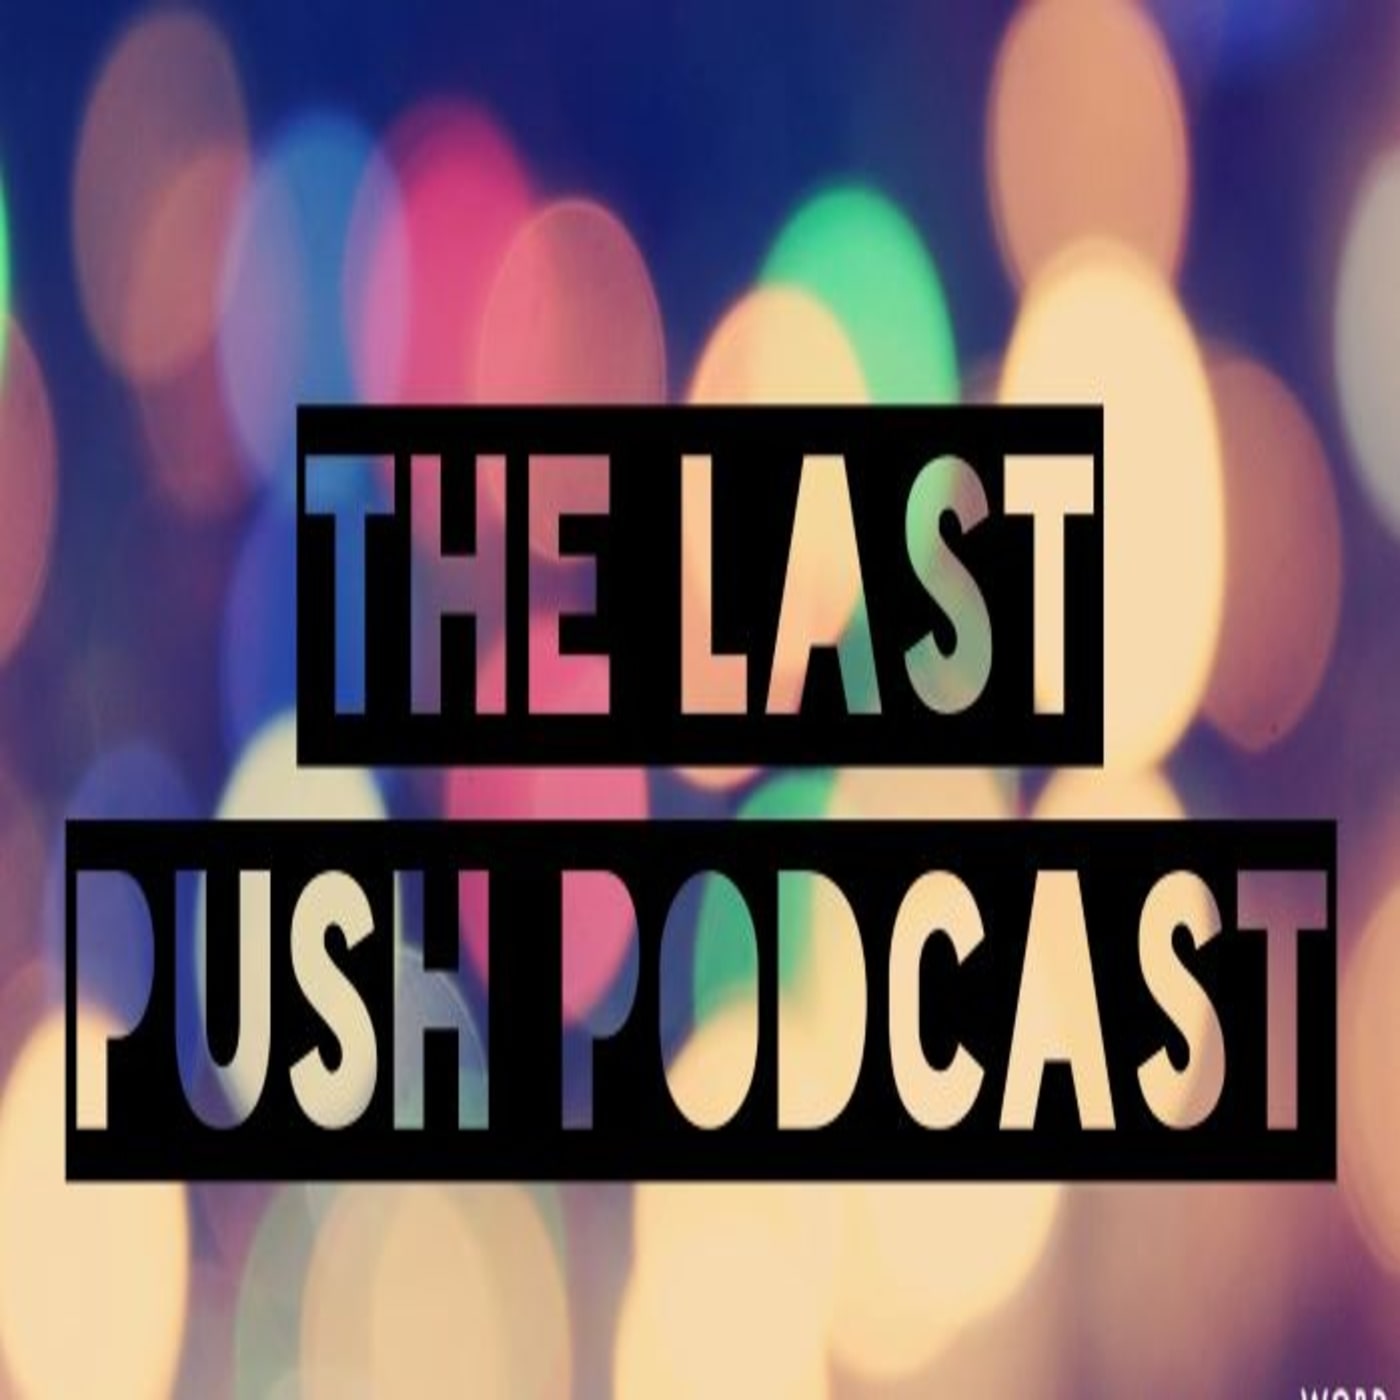 The Last Push Podcast!